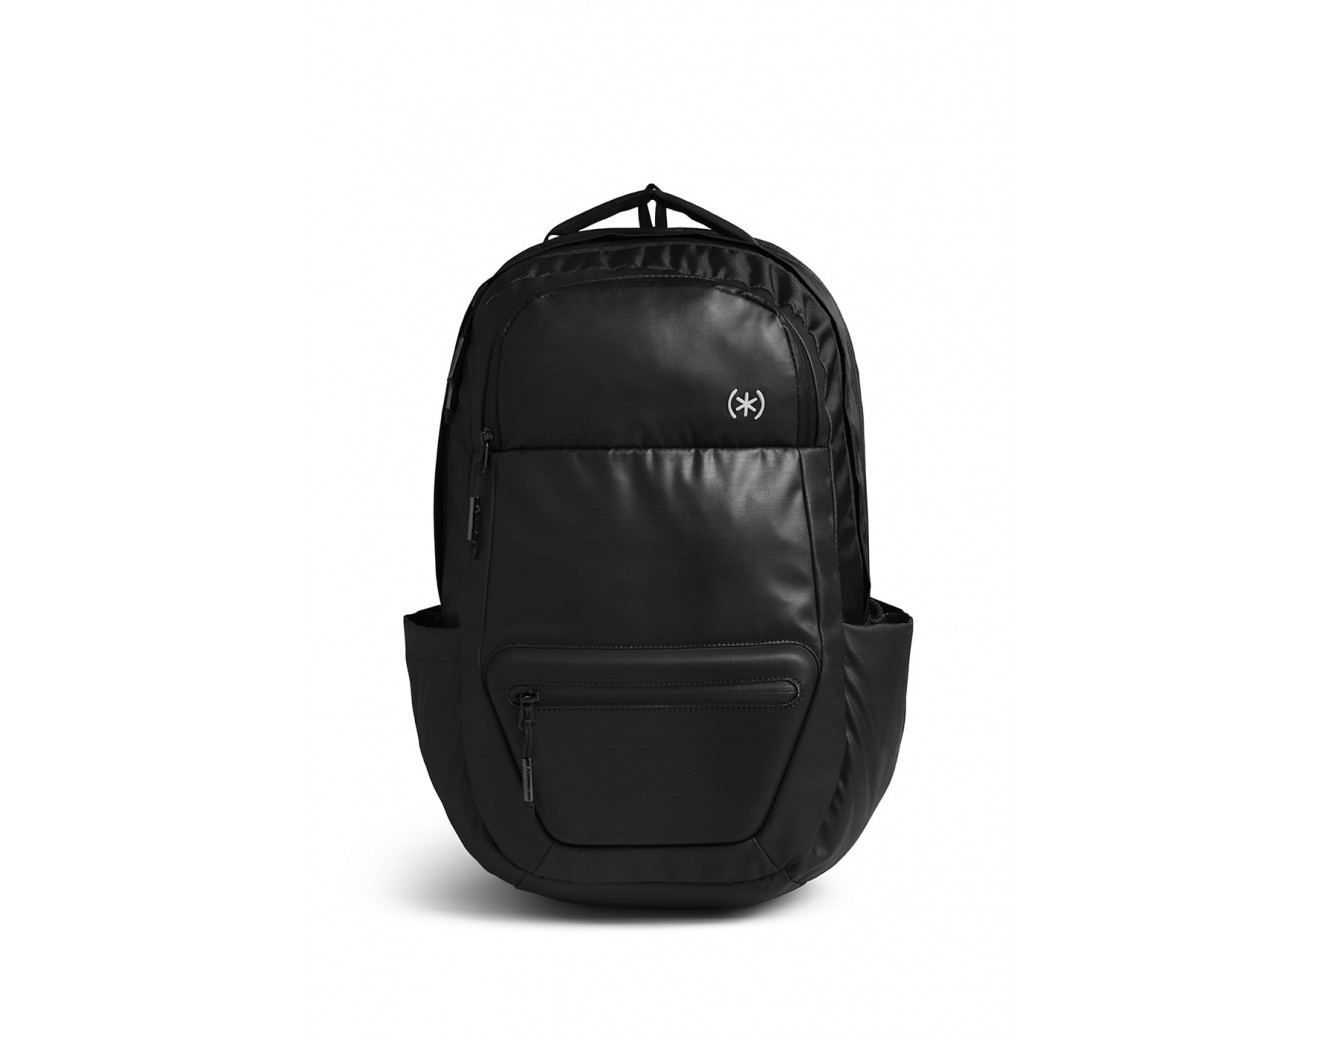 Раница Speck Transfer Pro 26L Backpack - Black